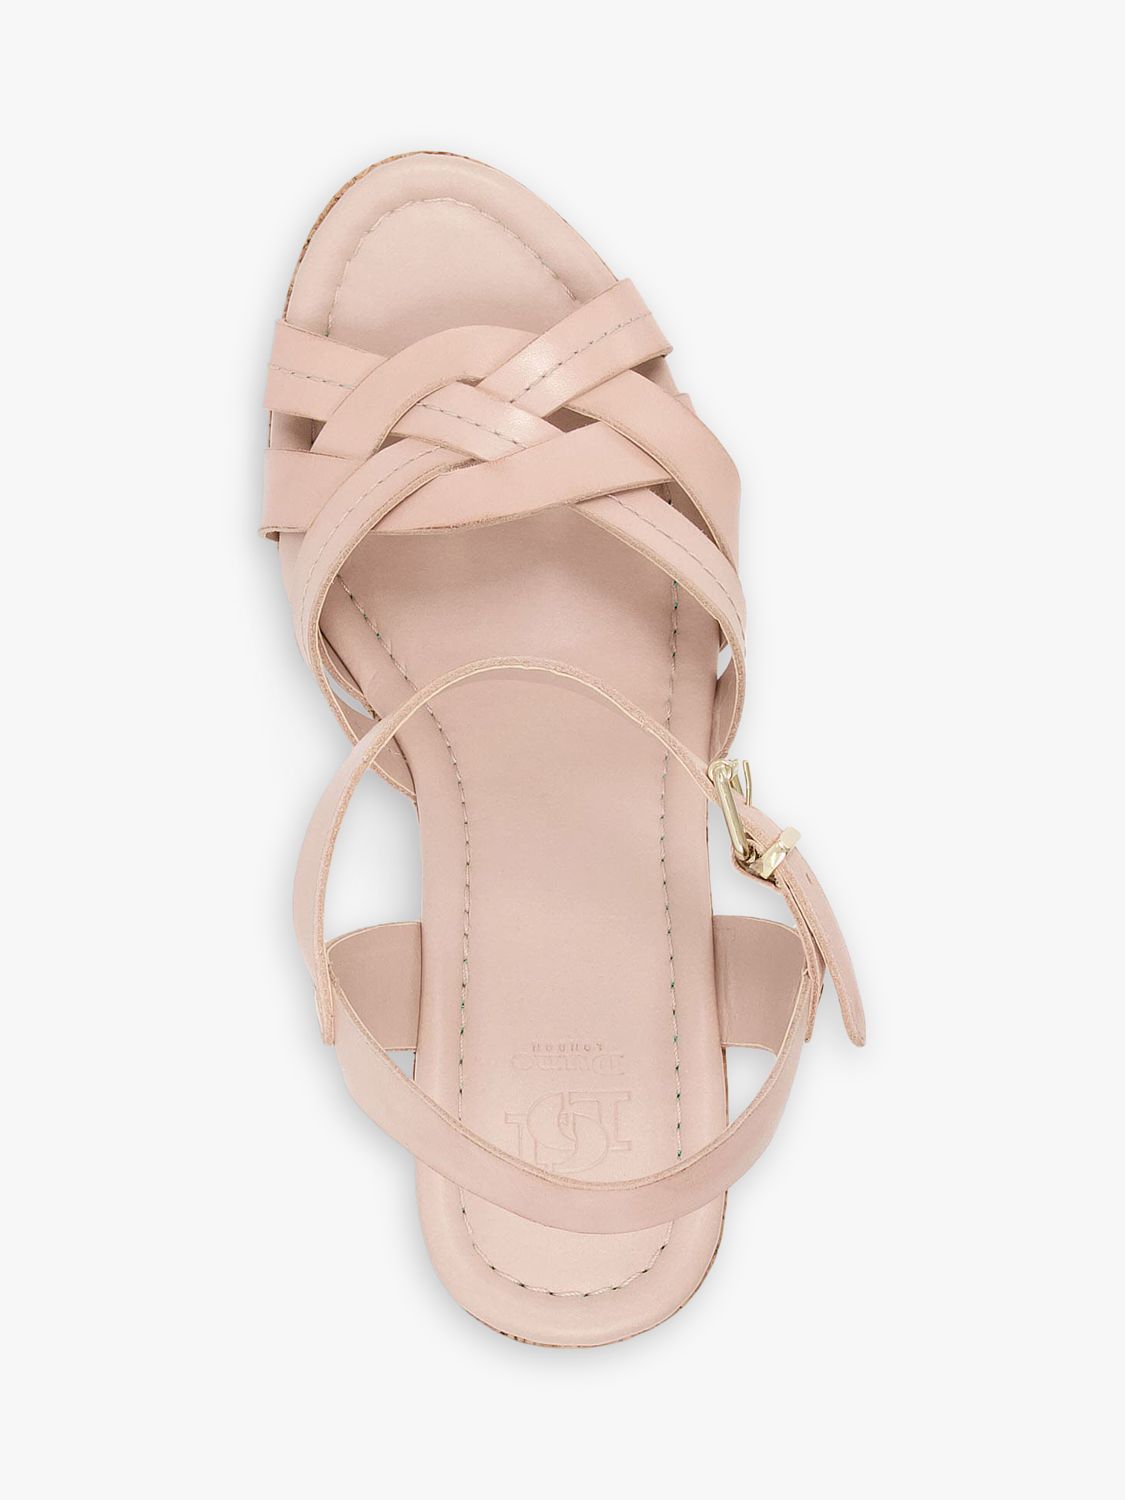 Dune Koral Leather Wedge Heel Sandals, Blush, 4